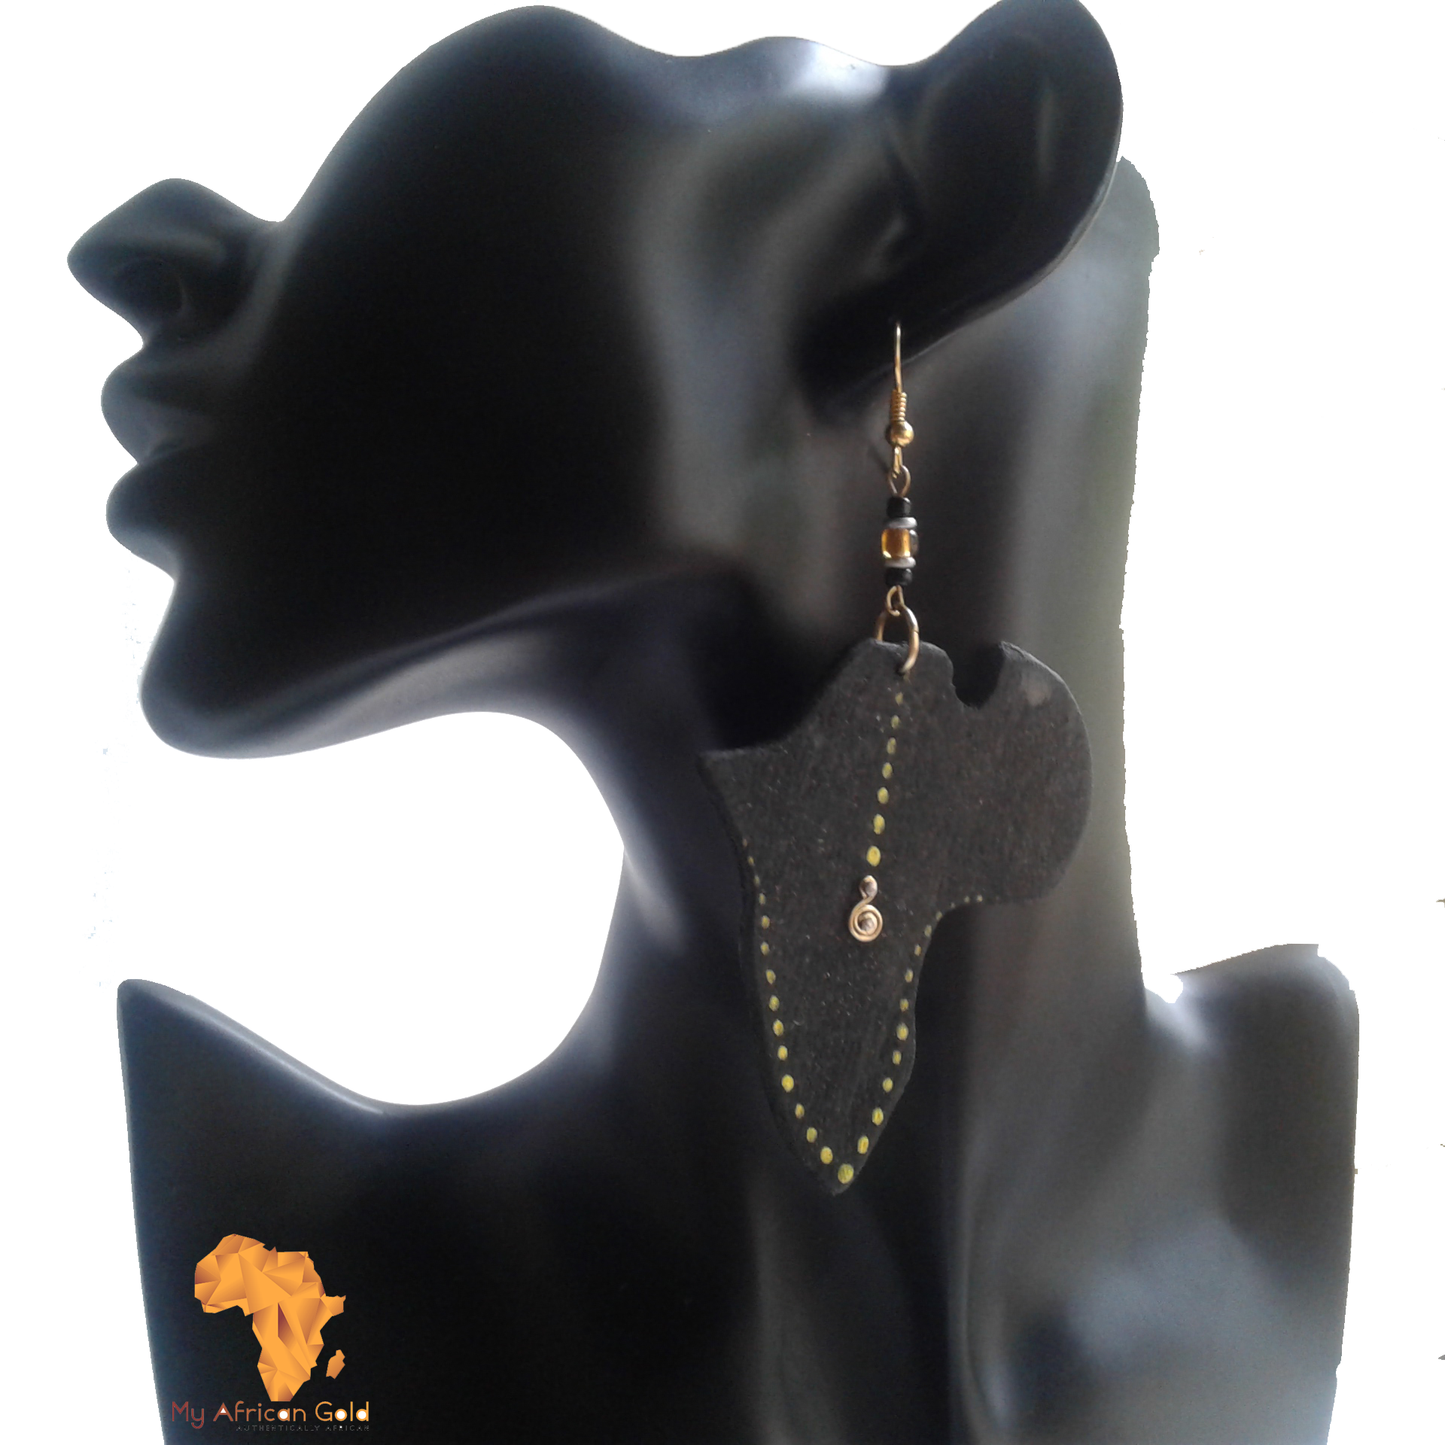 African Map Earrings